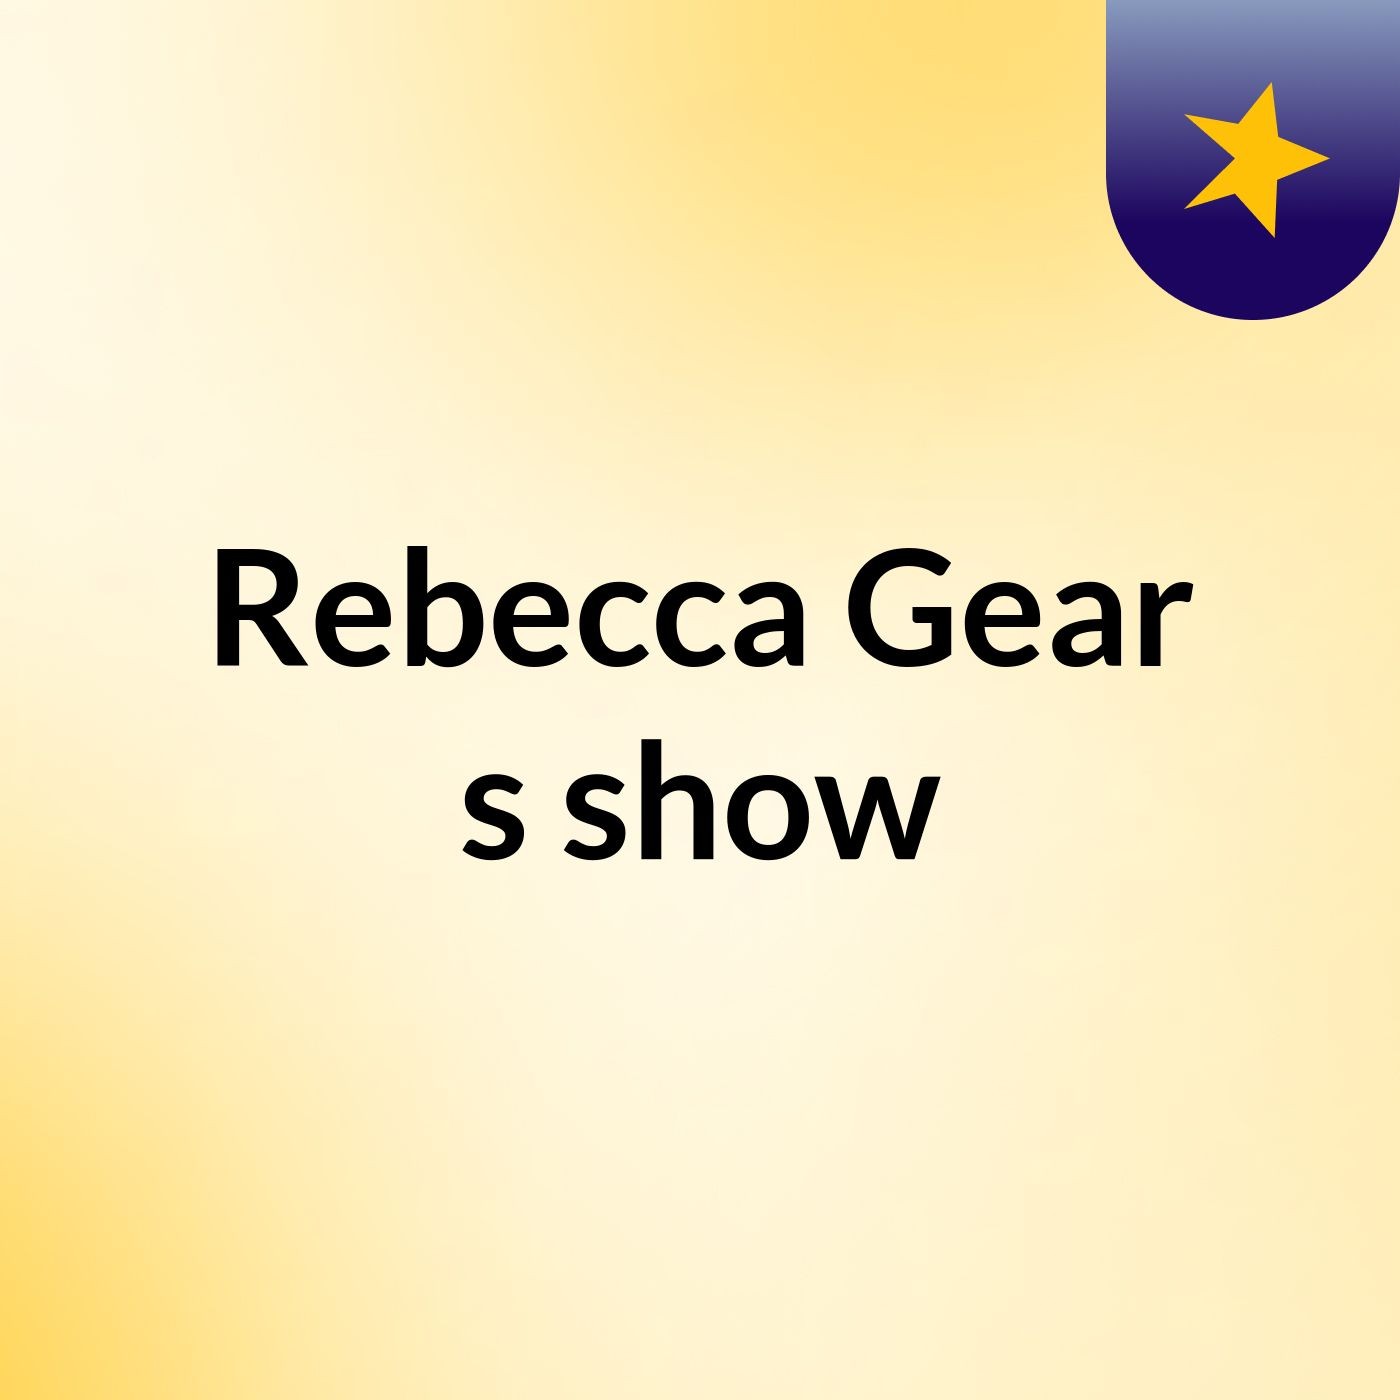 Rebecca Gear's show